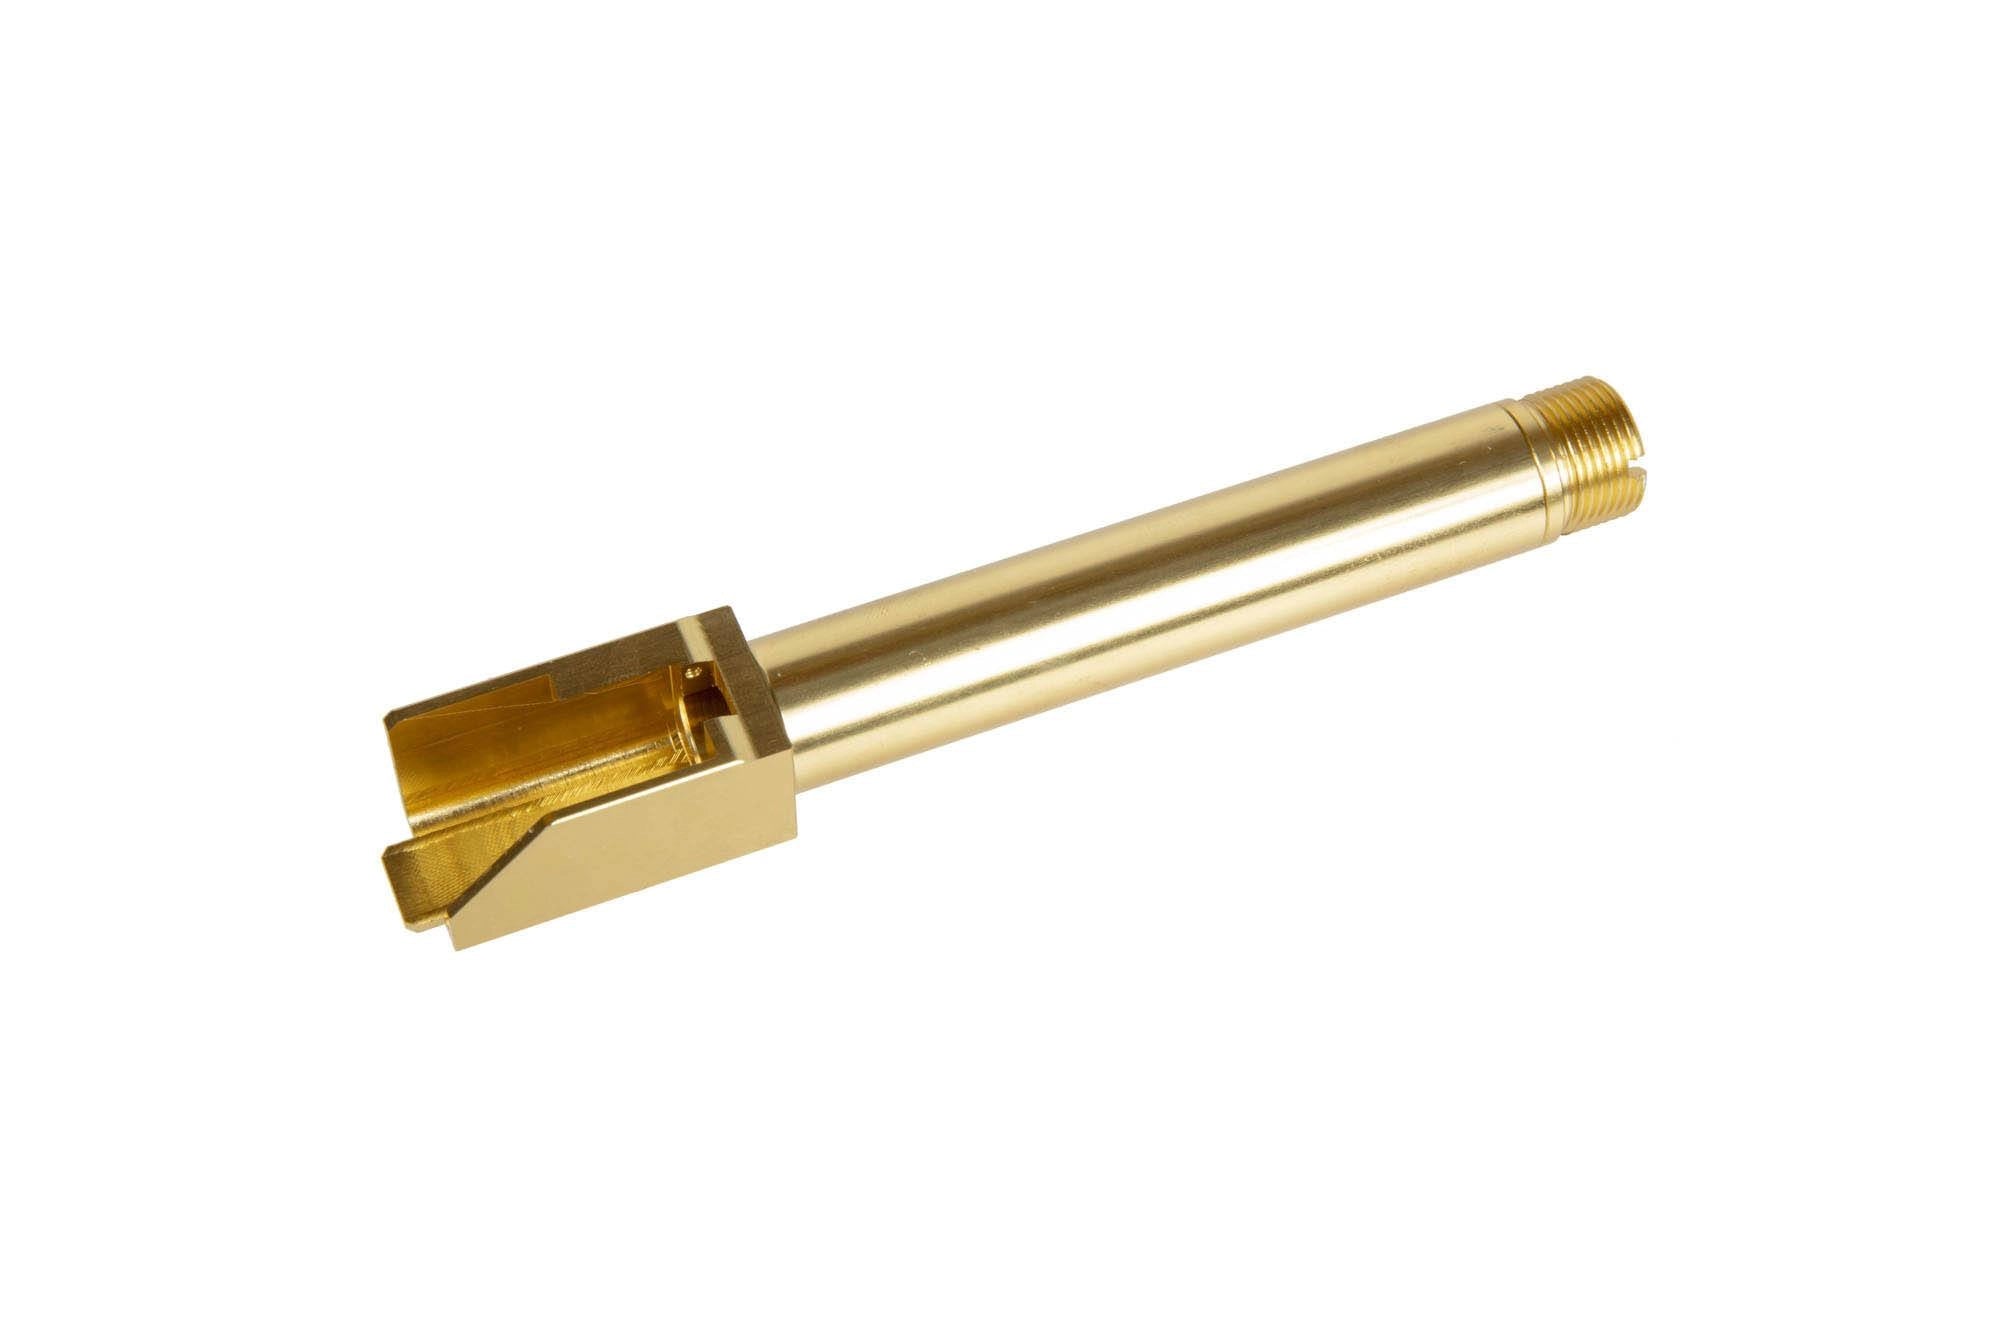 Non-Recoiling 2 Way Fixed" Outer Barrel for Umarex Glock 17 Replicas - Gold"